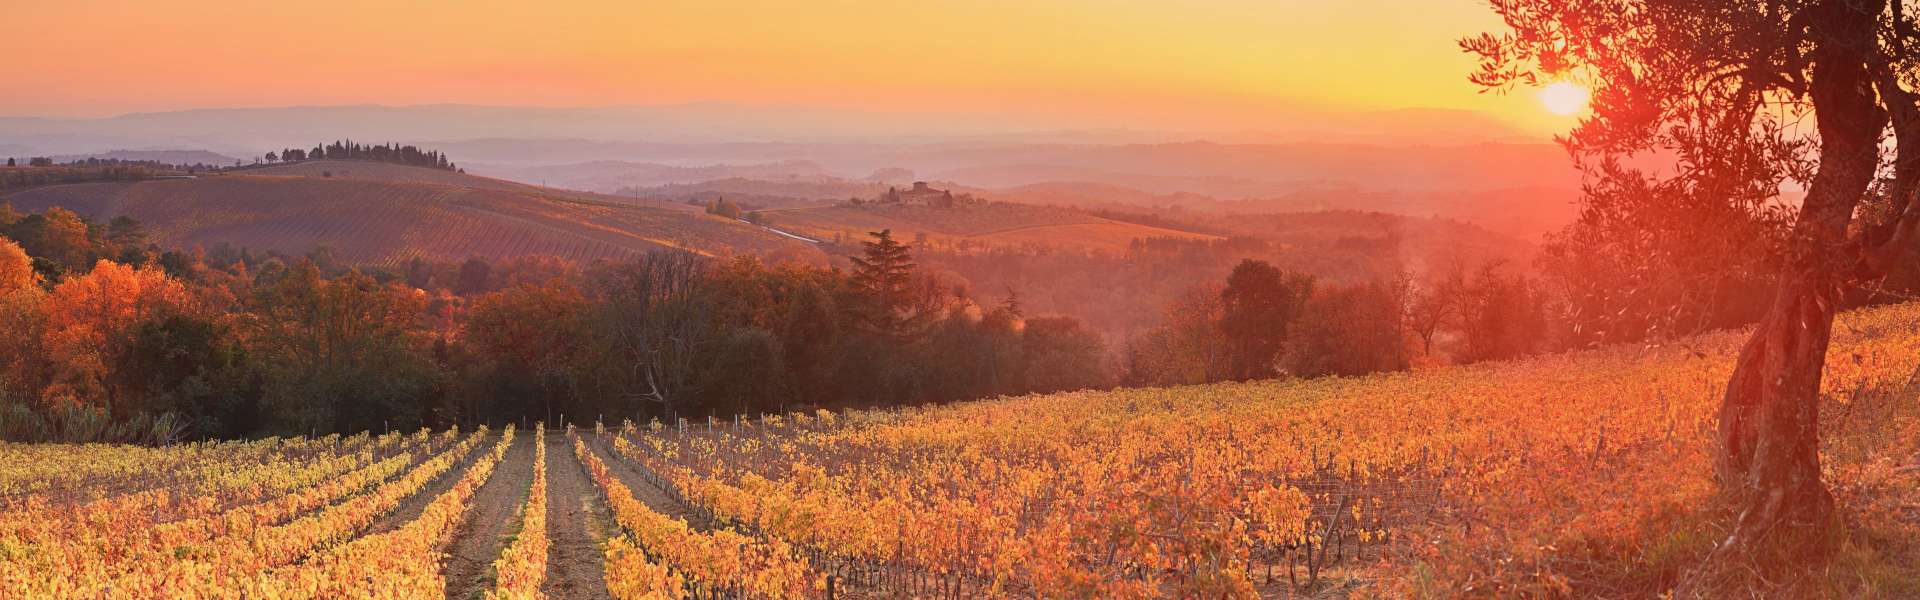 Sunset-dusk-vineyard-Siena-Tuscany-Italy_3840x1200.jpg